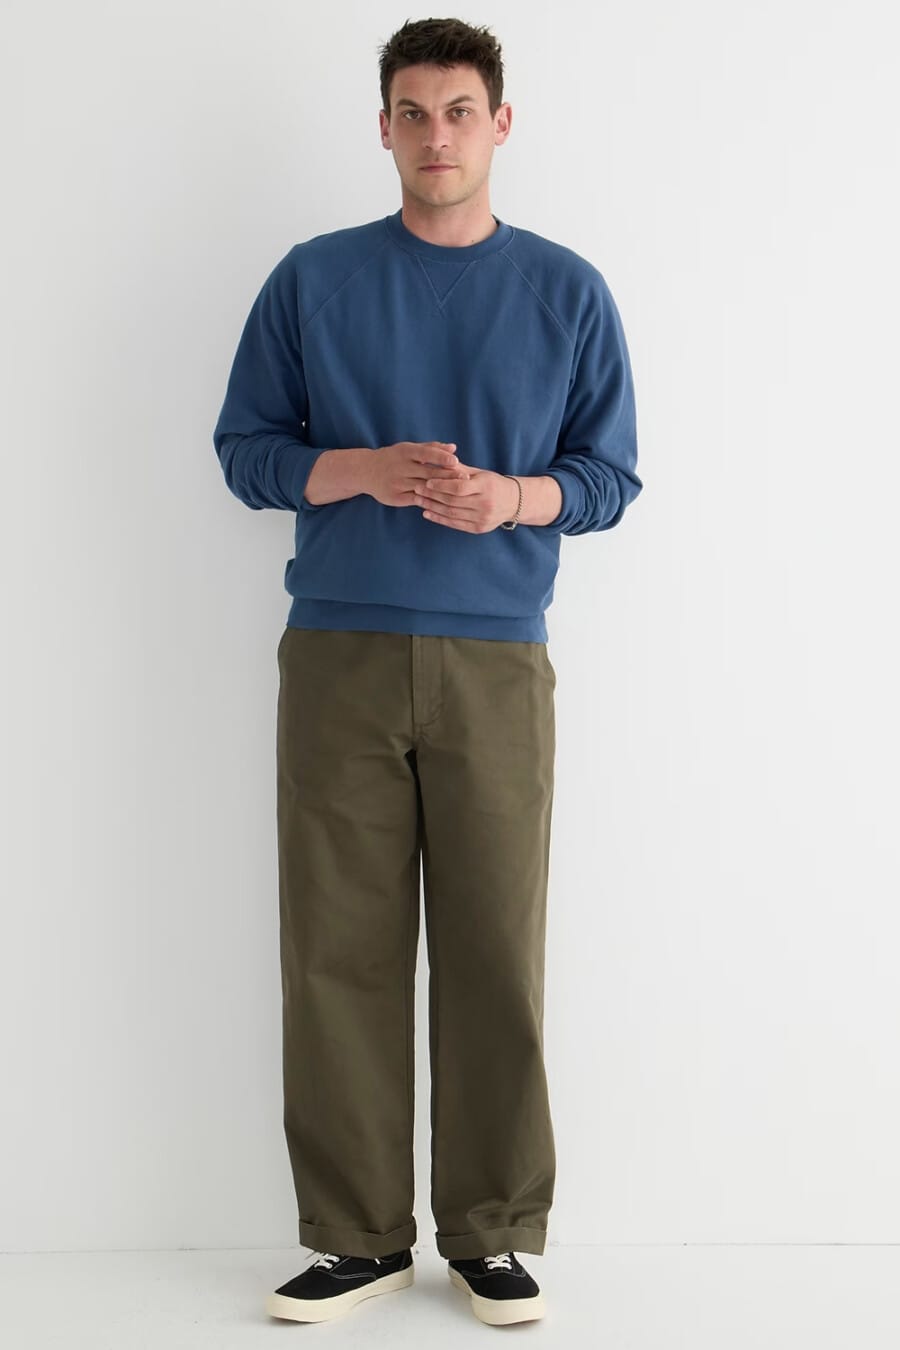 Men's green wide-leg pants, petrol blue sweatshirt and black skate shoes outfit